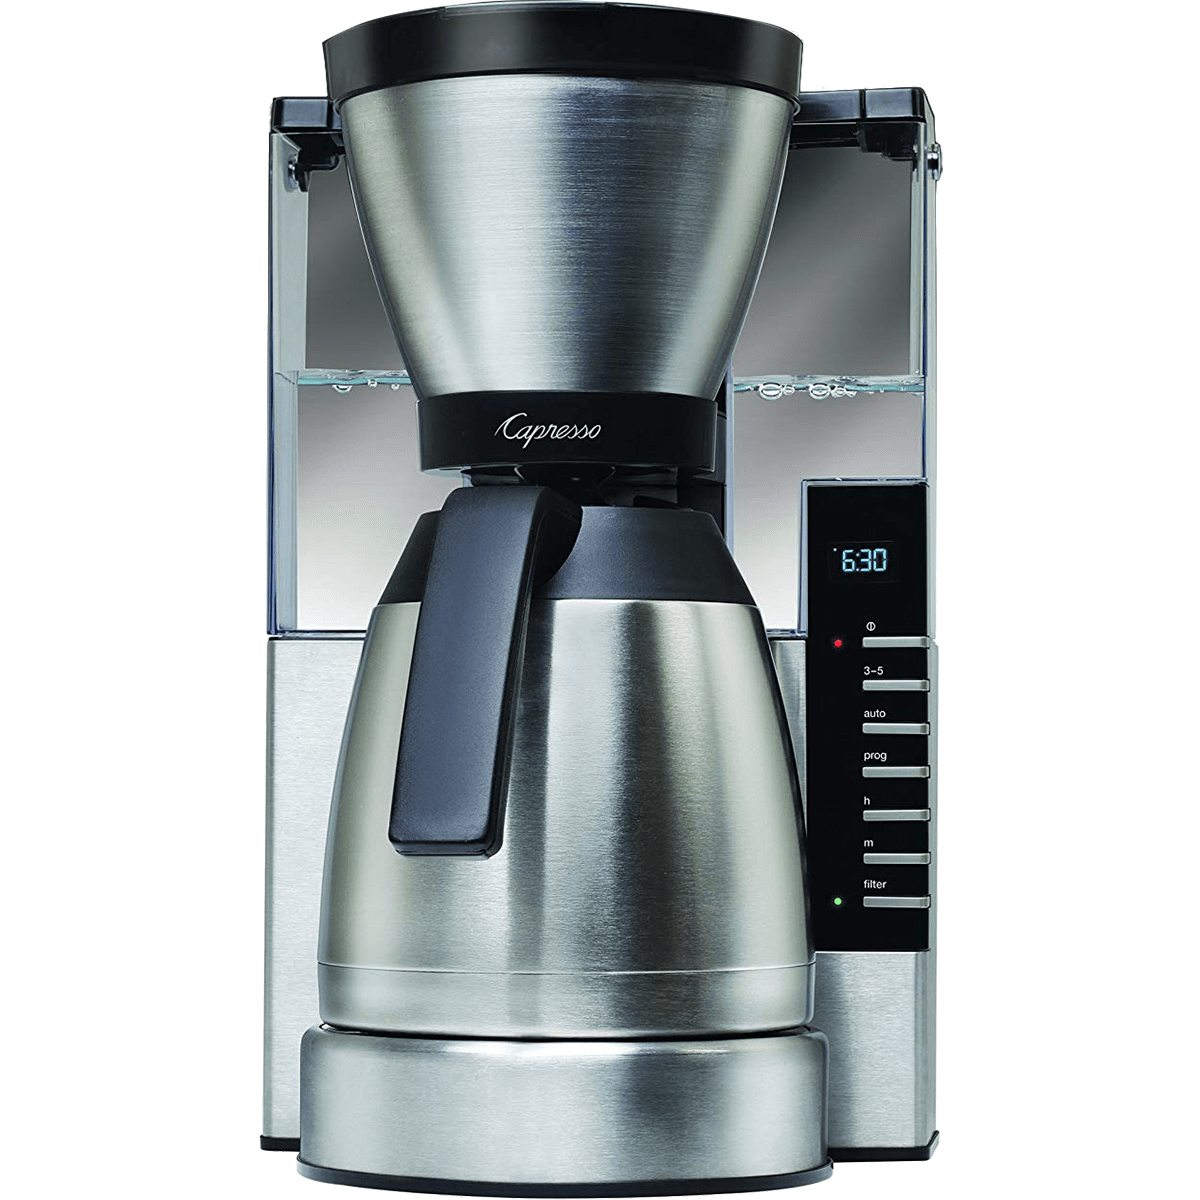 Capresso Mt900 10 Cup Rapid Brew Coffee Maker - Thermal Carafe